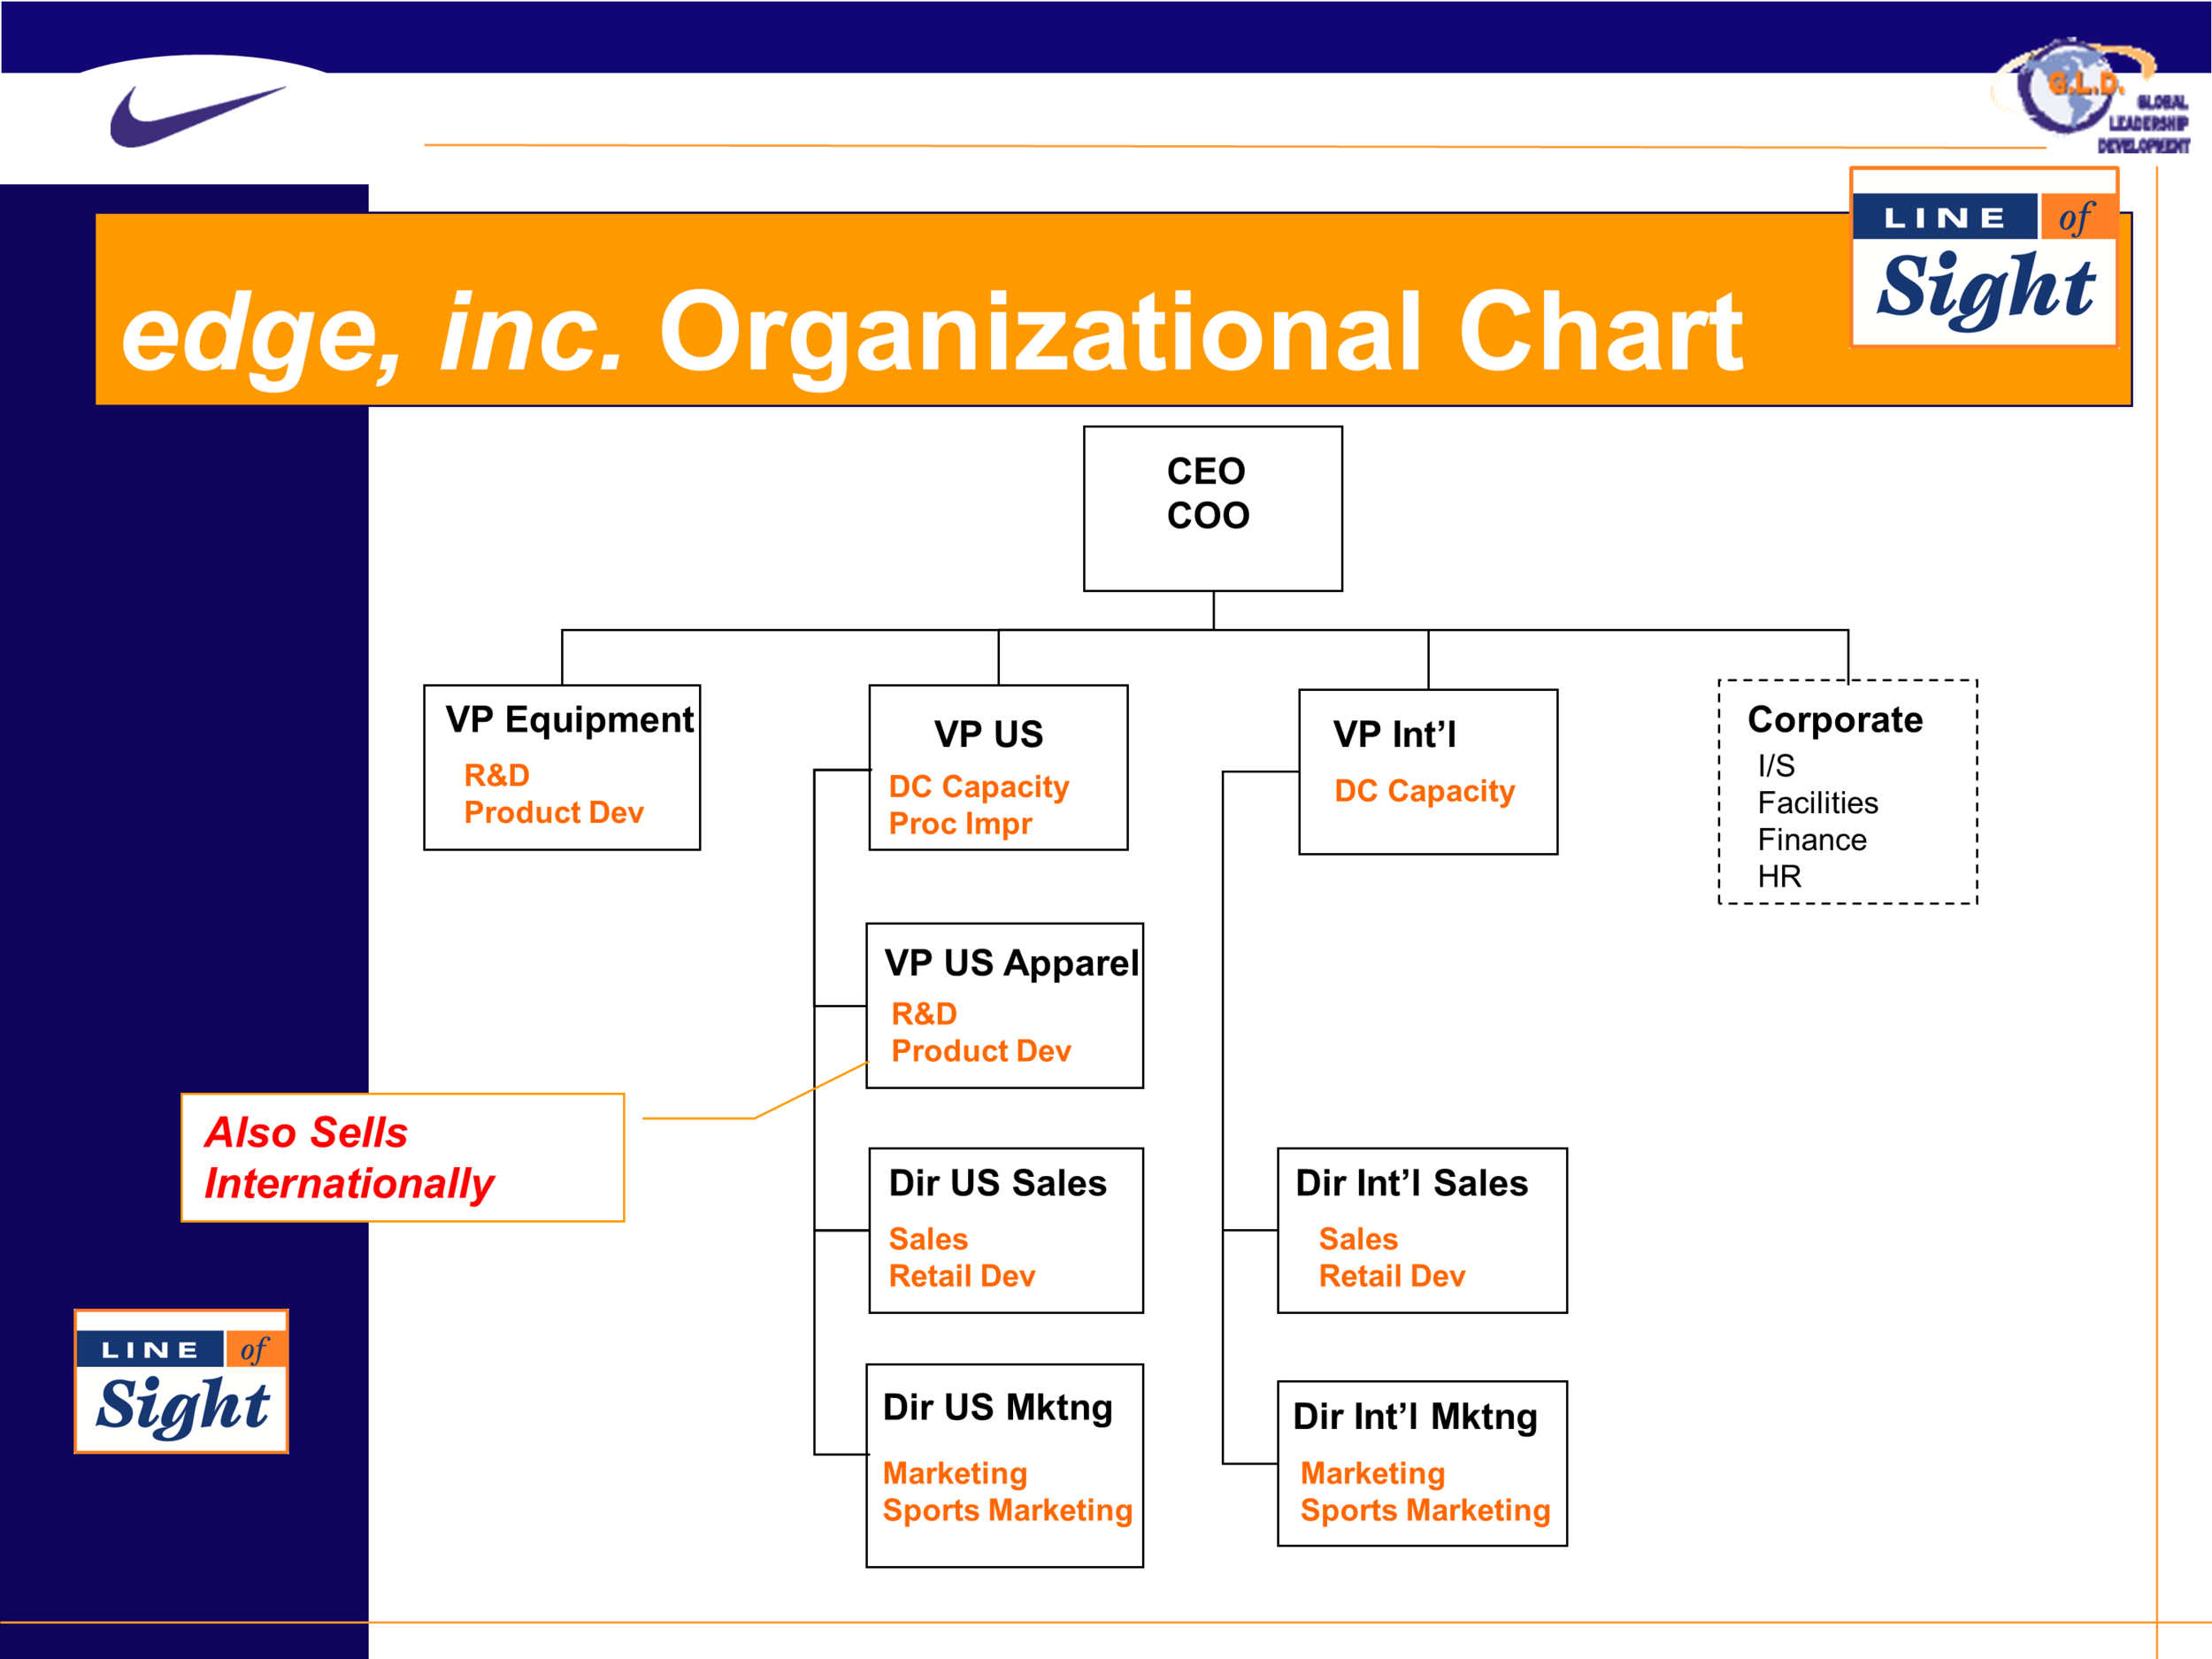 nike matrix organizational structure